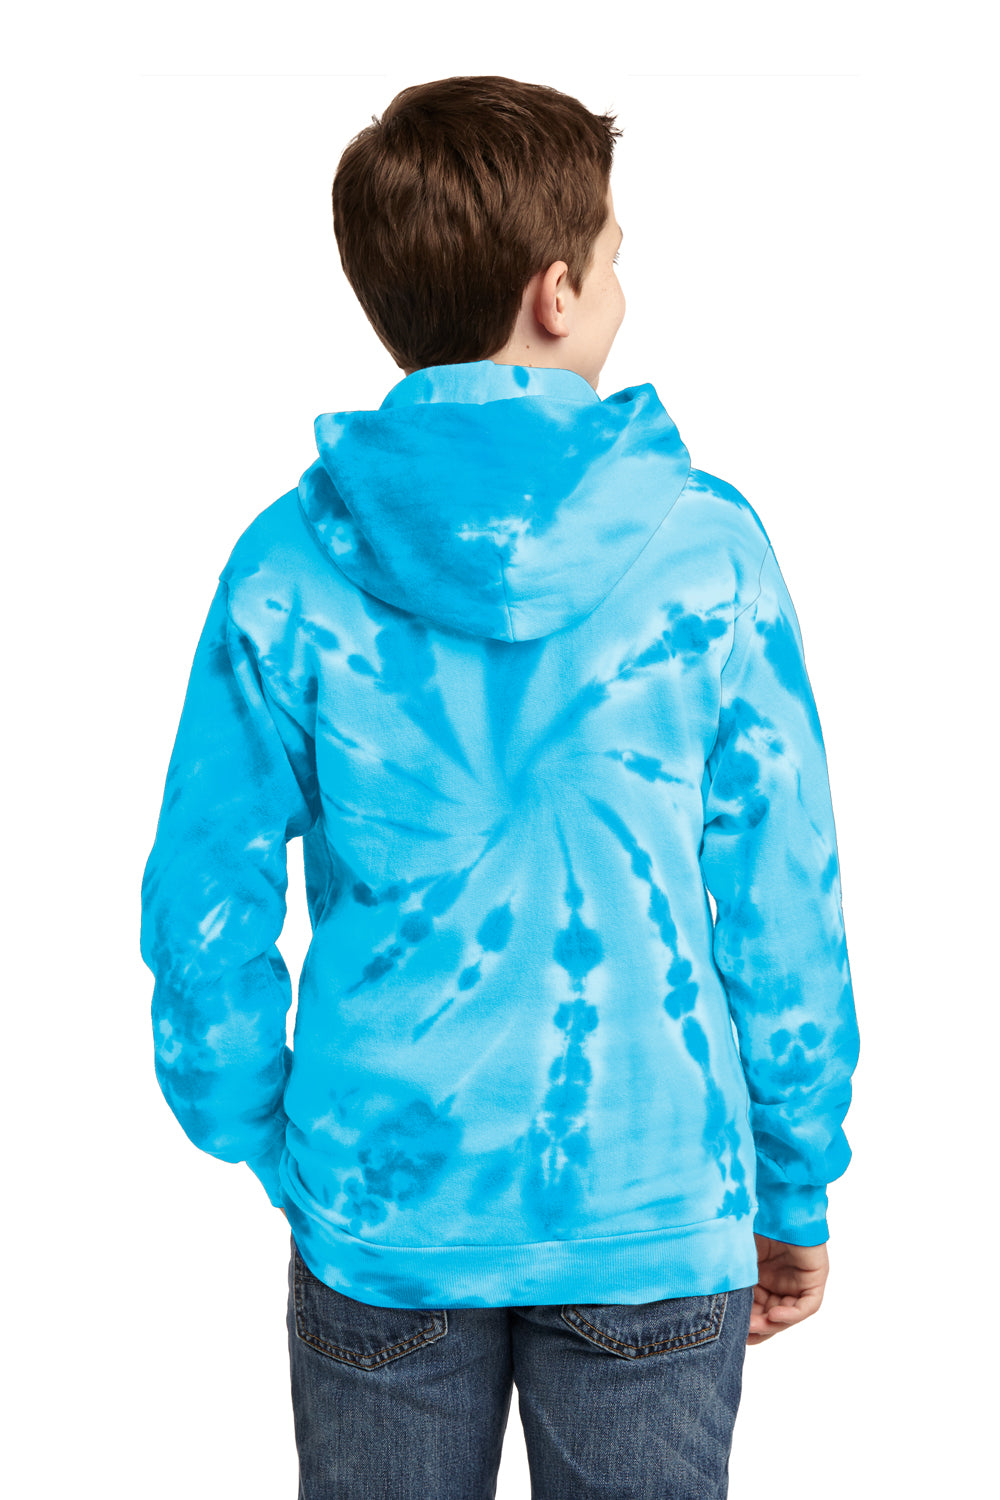 Port & Company PC146Y Youth Tie-Dye Fleece Hooded Sweatshirt Hoodie Turquoise Blue Back